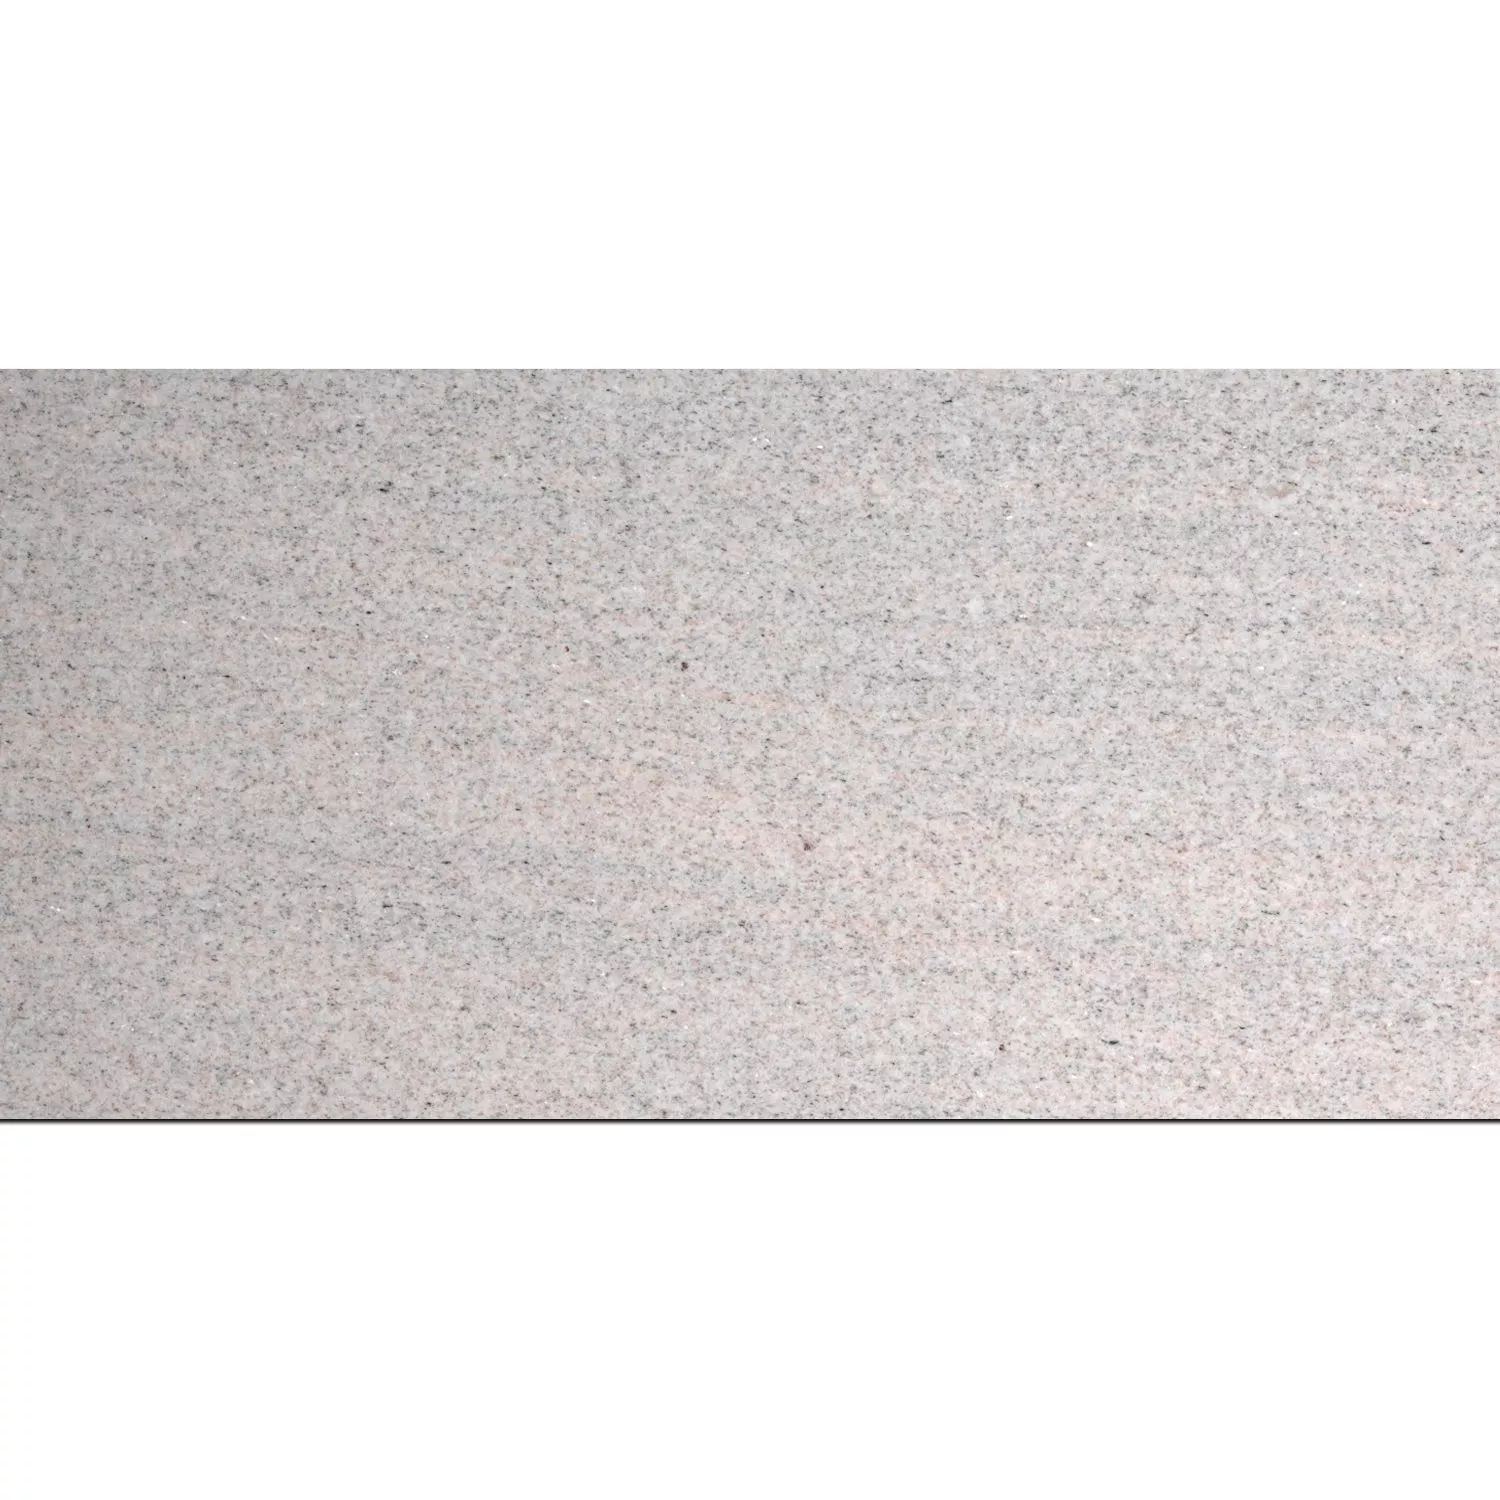 Muster Natursteinfliesen Granit Imperial White Poliert 30,5x61cm